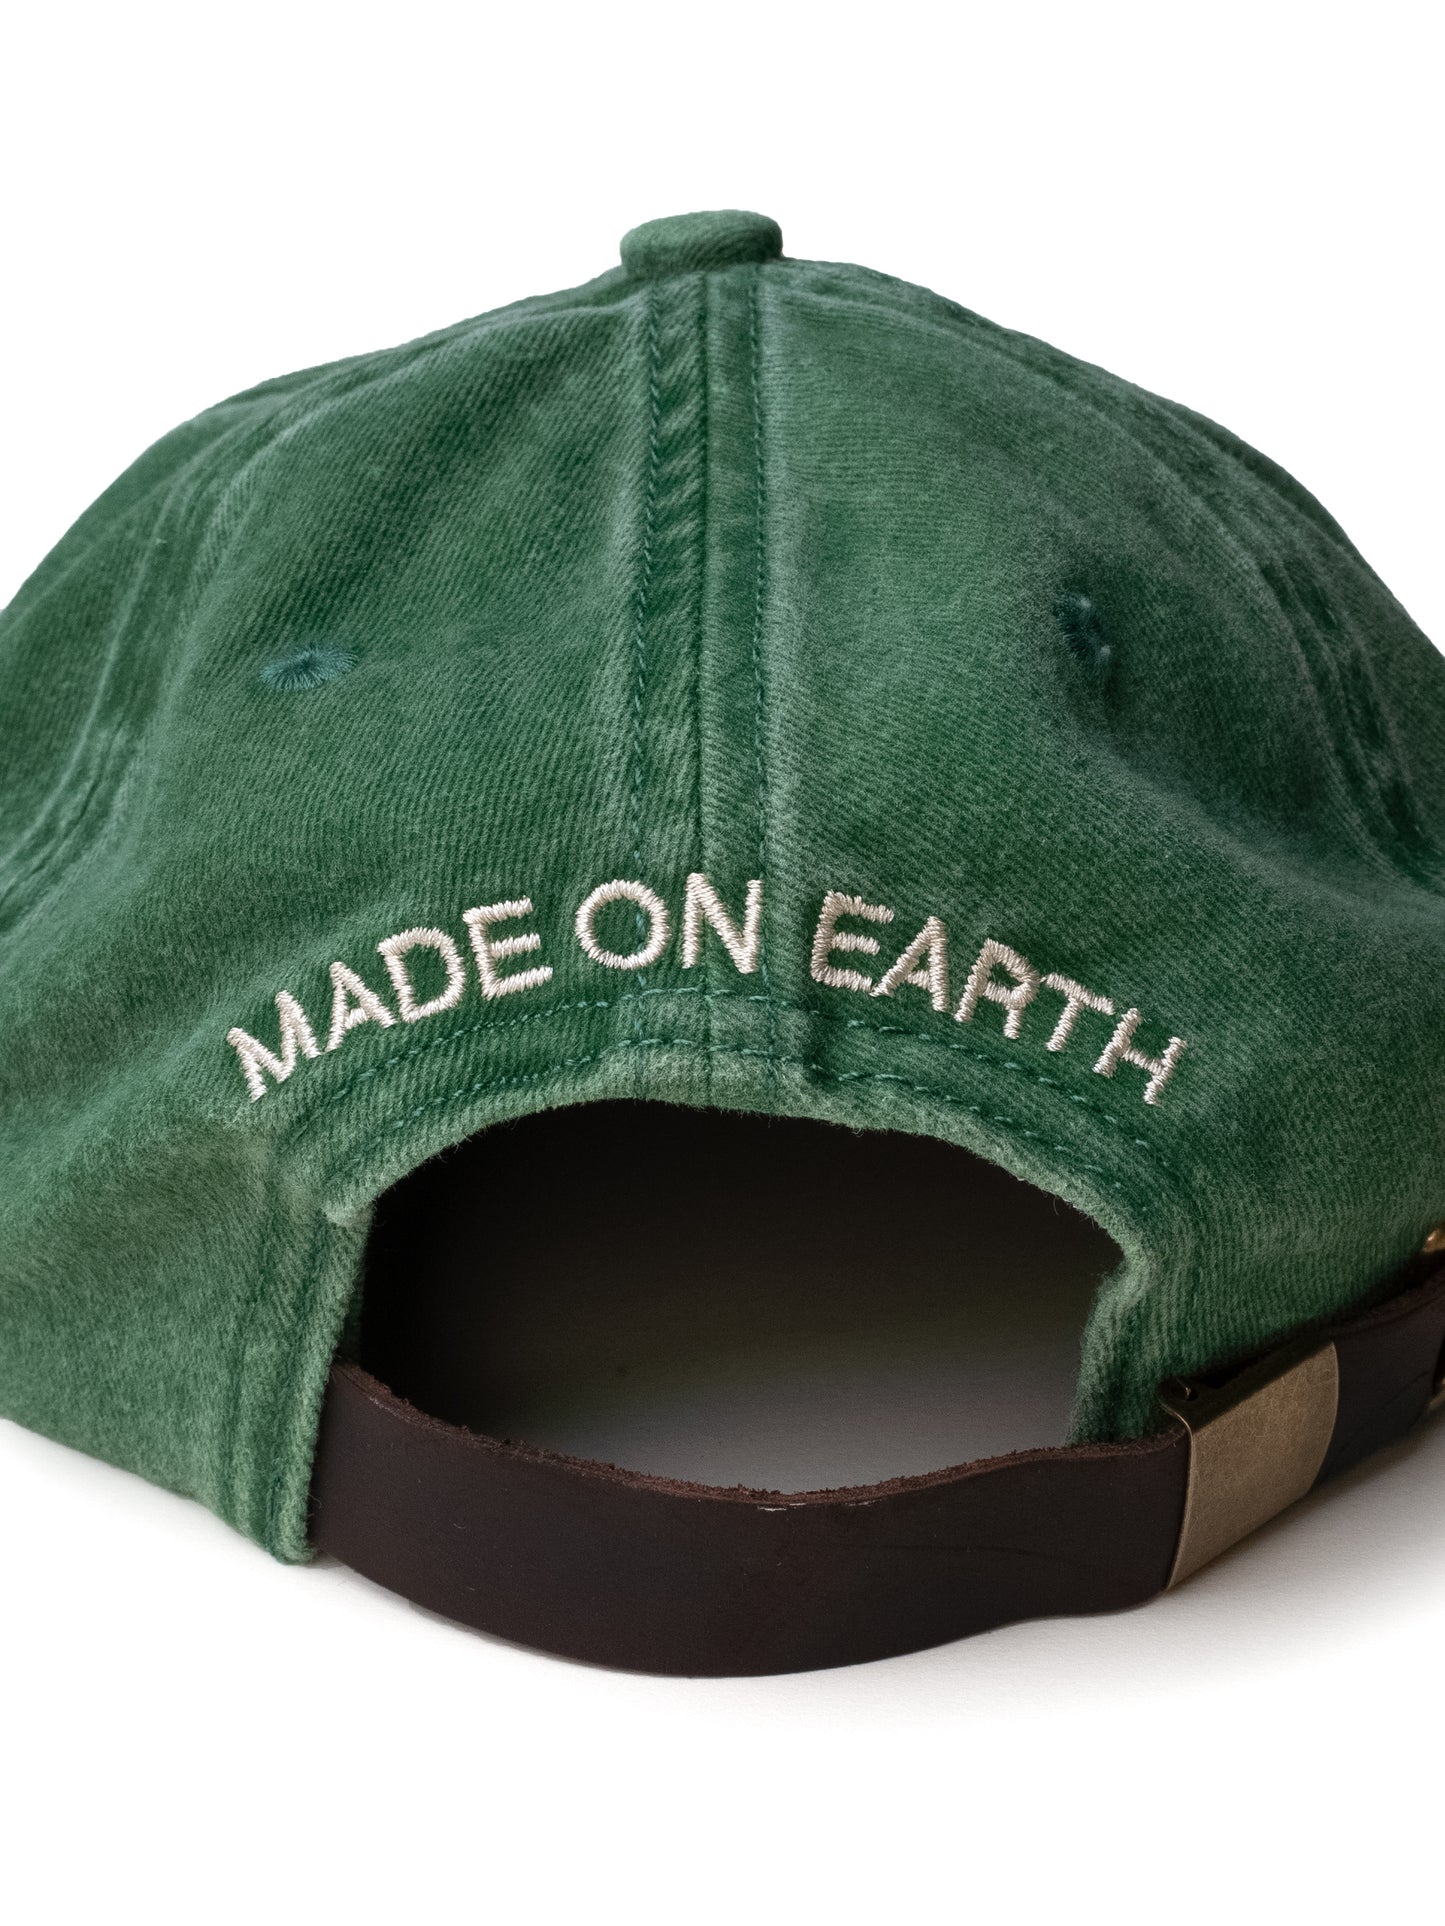 Classic Green Upside Down A Hat